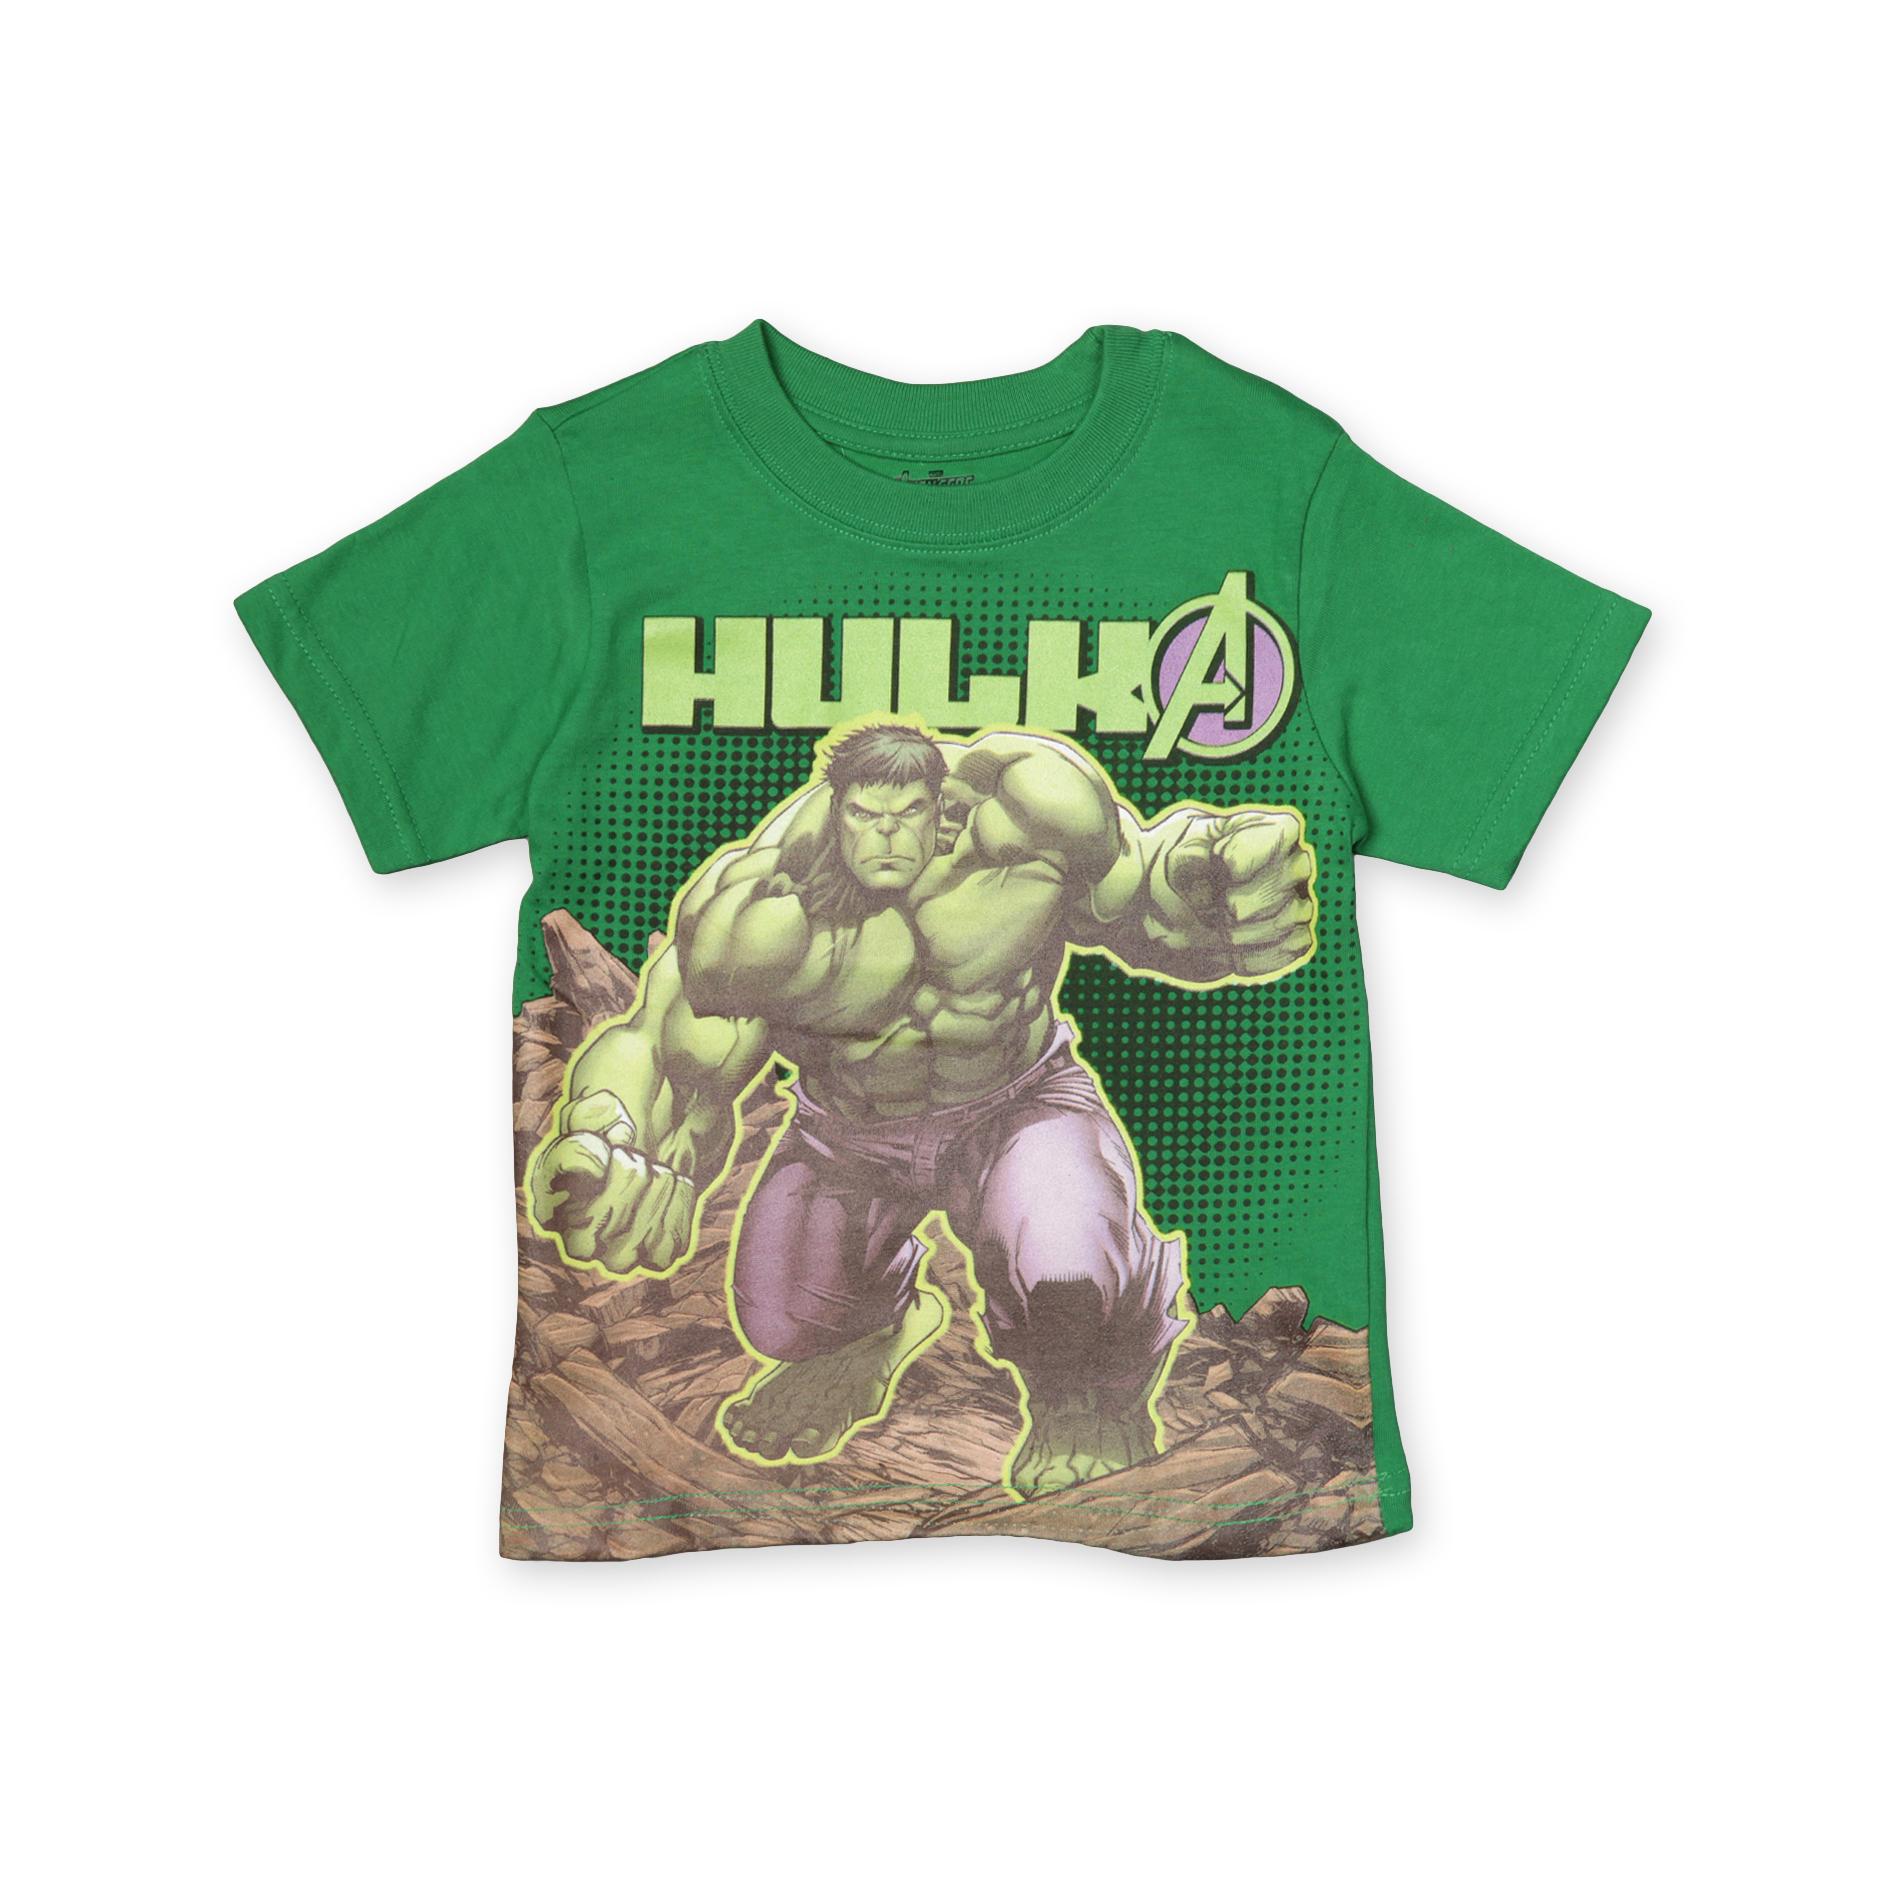 Marvel Hulk Toddler Boy's T-shirt Green 4t - $6.98